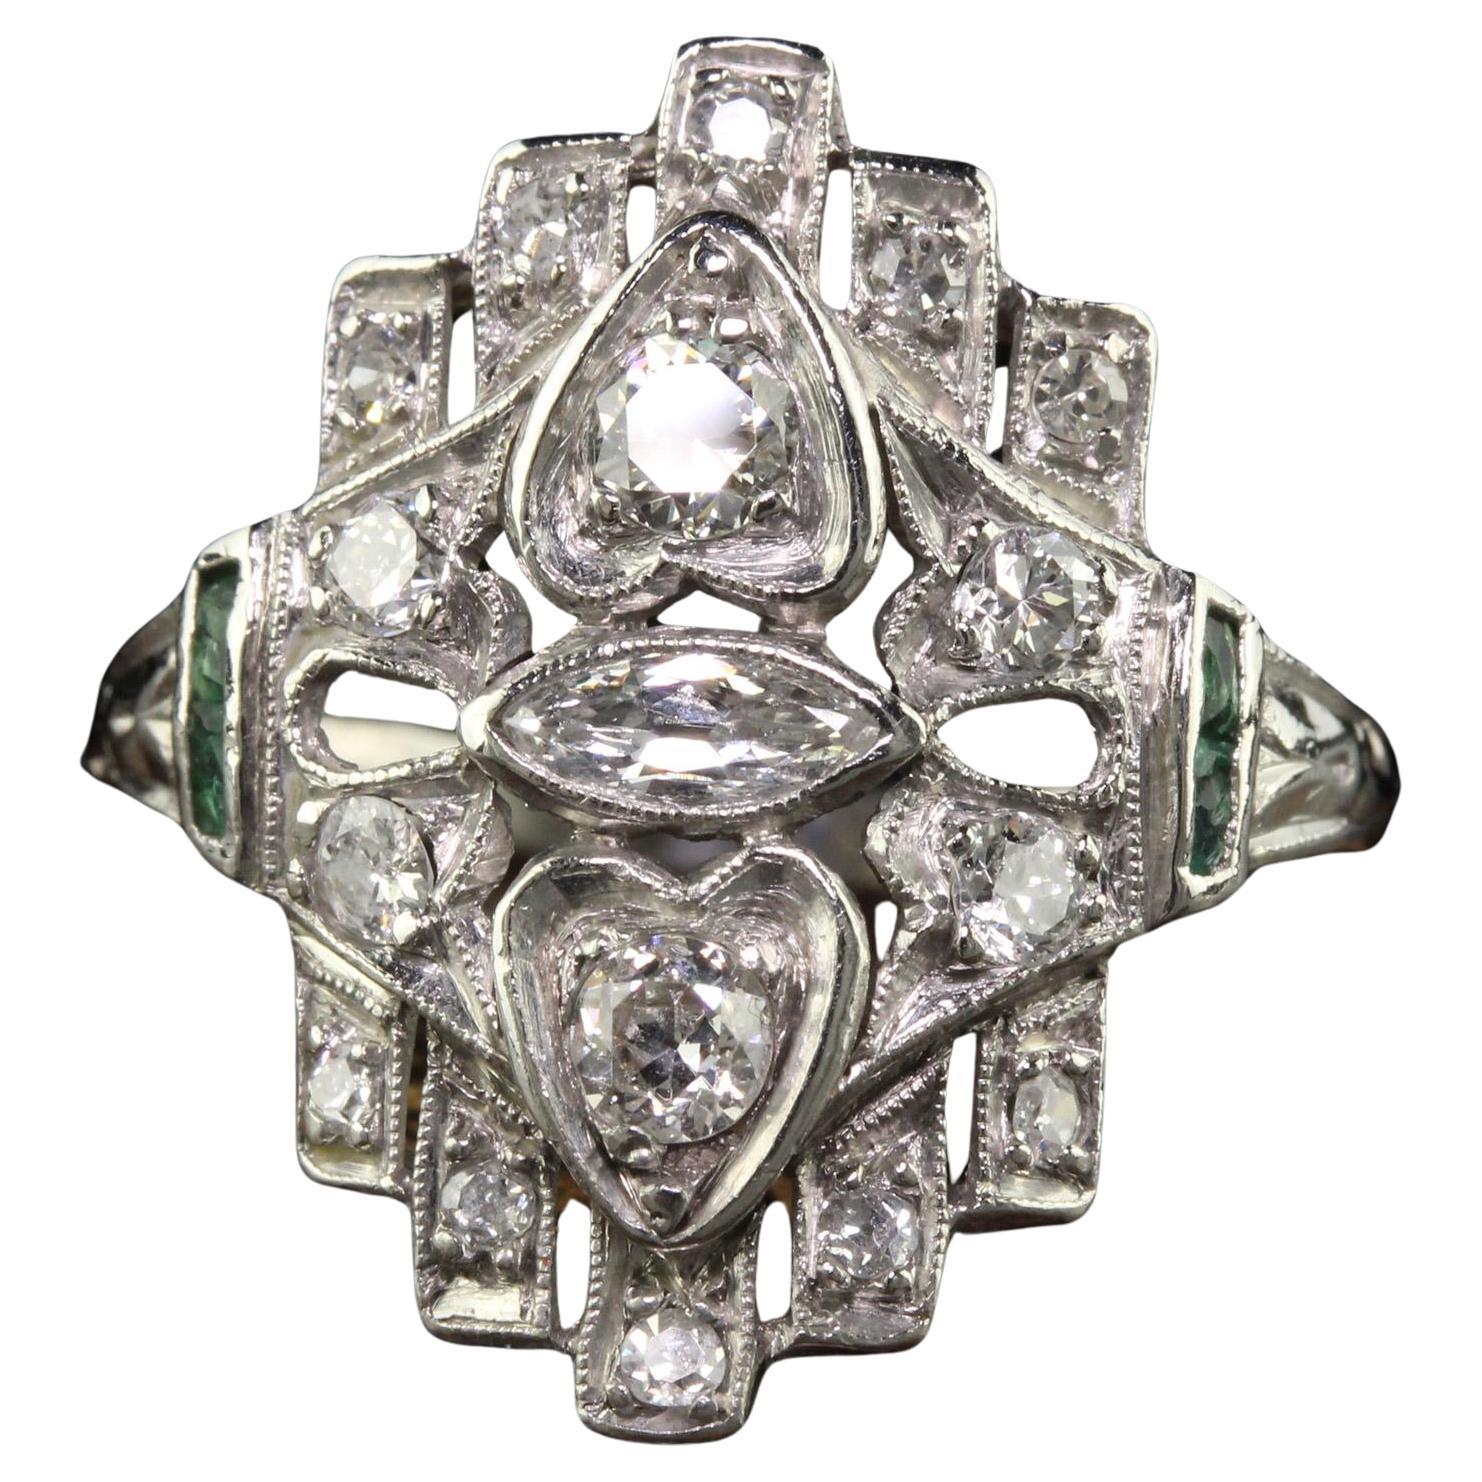 Antique Art Deco Platinum Old Euro Marquise Diamond and Emerald Shield Ring